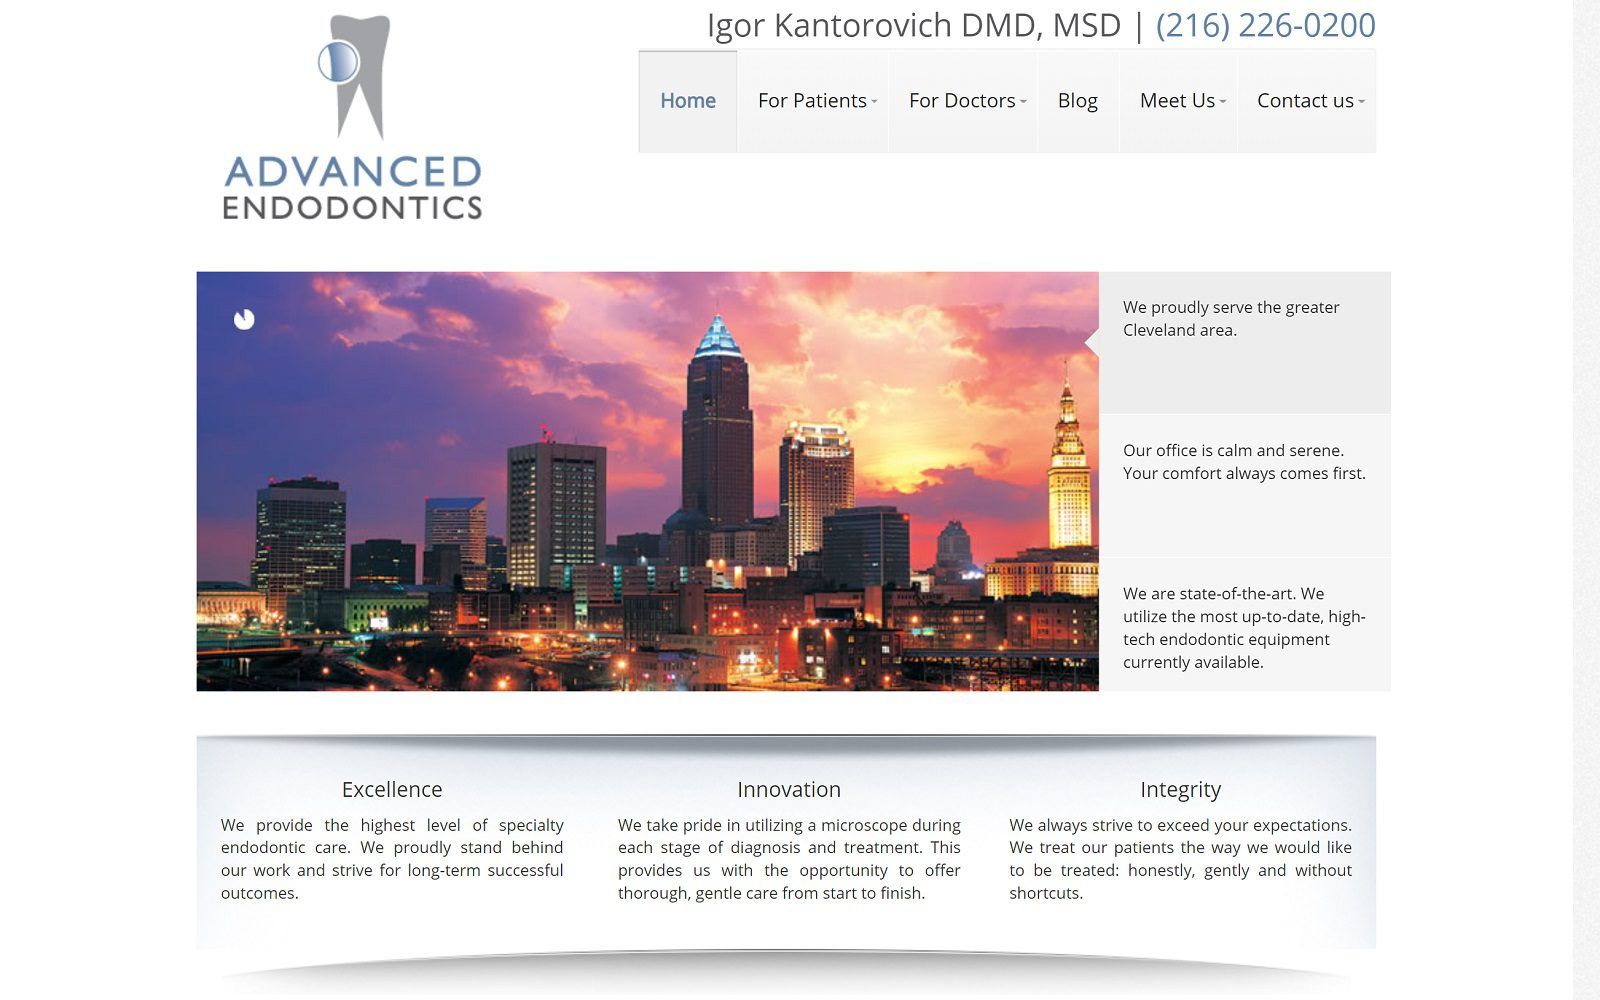 The screenshot of dr. Igor kantorovich, dmd, msd advanced endodontics website